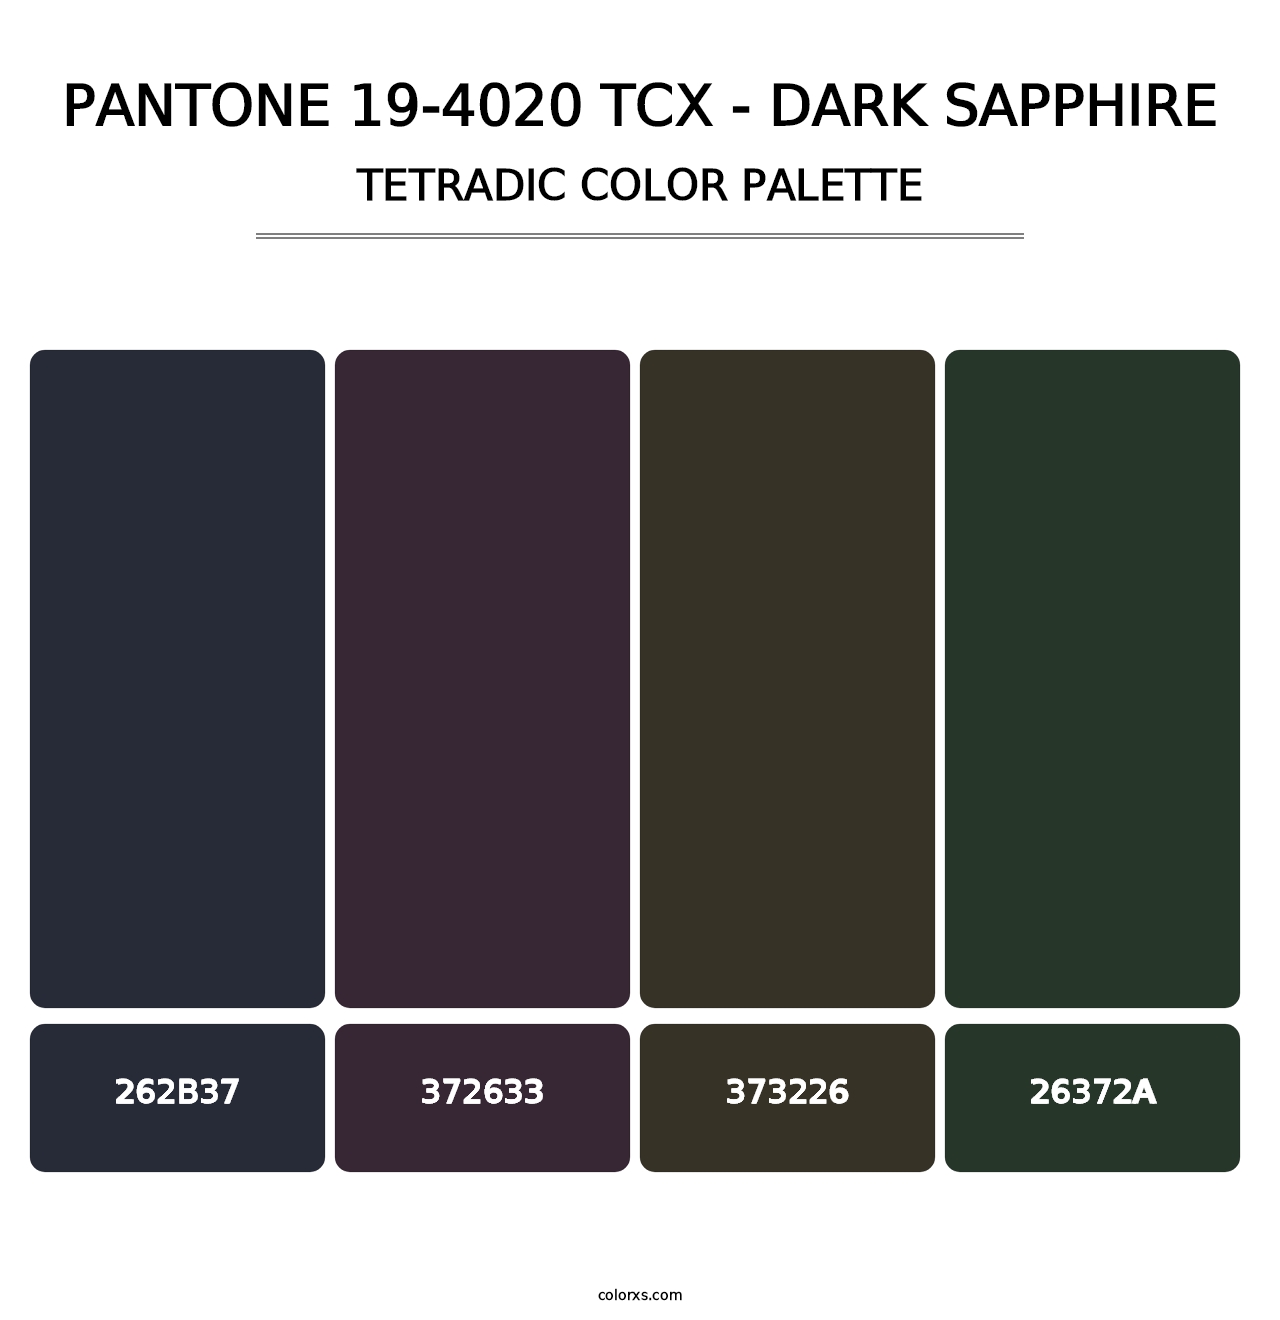 PANTONE 19-4020 TCX - Dark Sapphire - Tetradic Color Palette